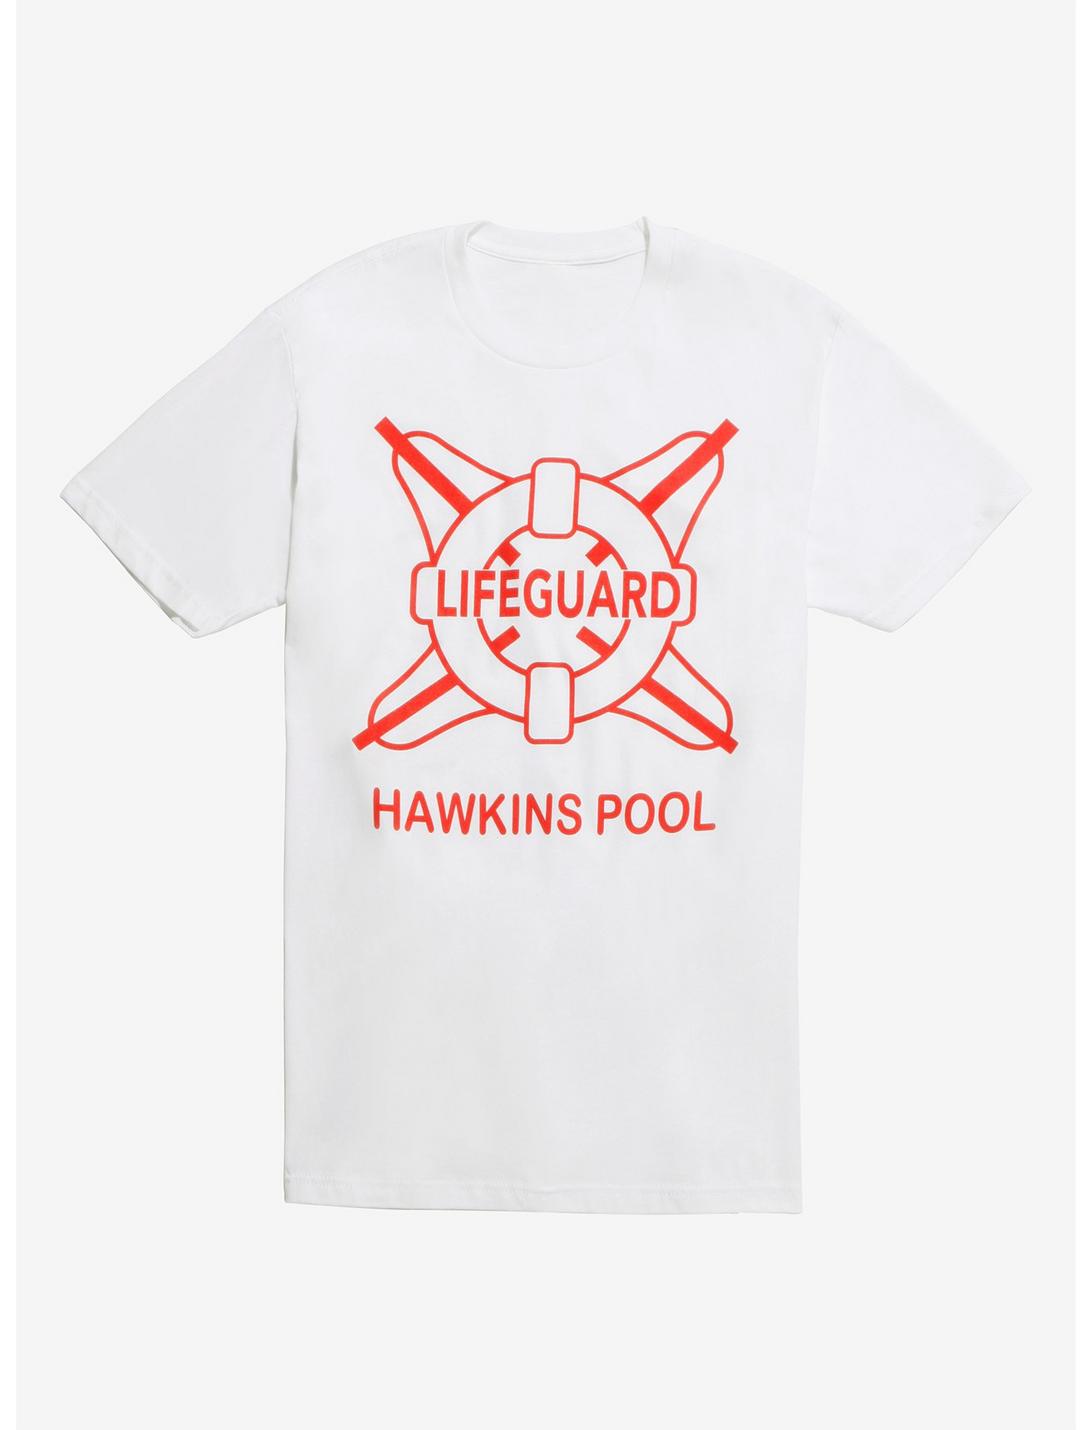 Hawkins Pool Lifeguard Strange TV Show Mens T-Shirt